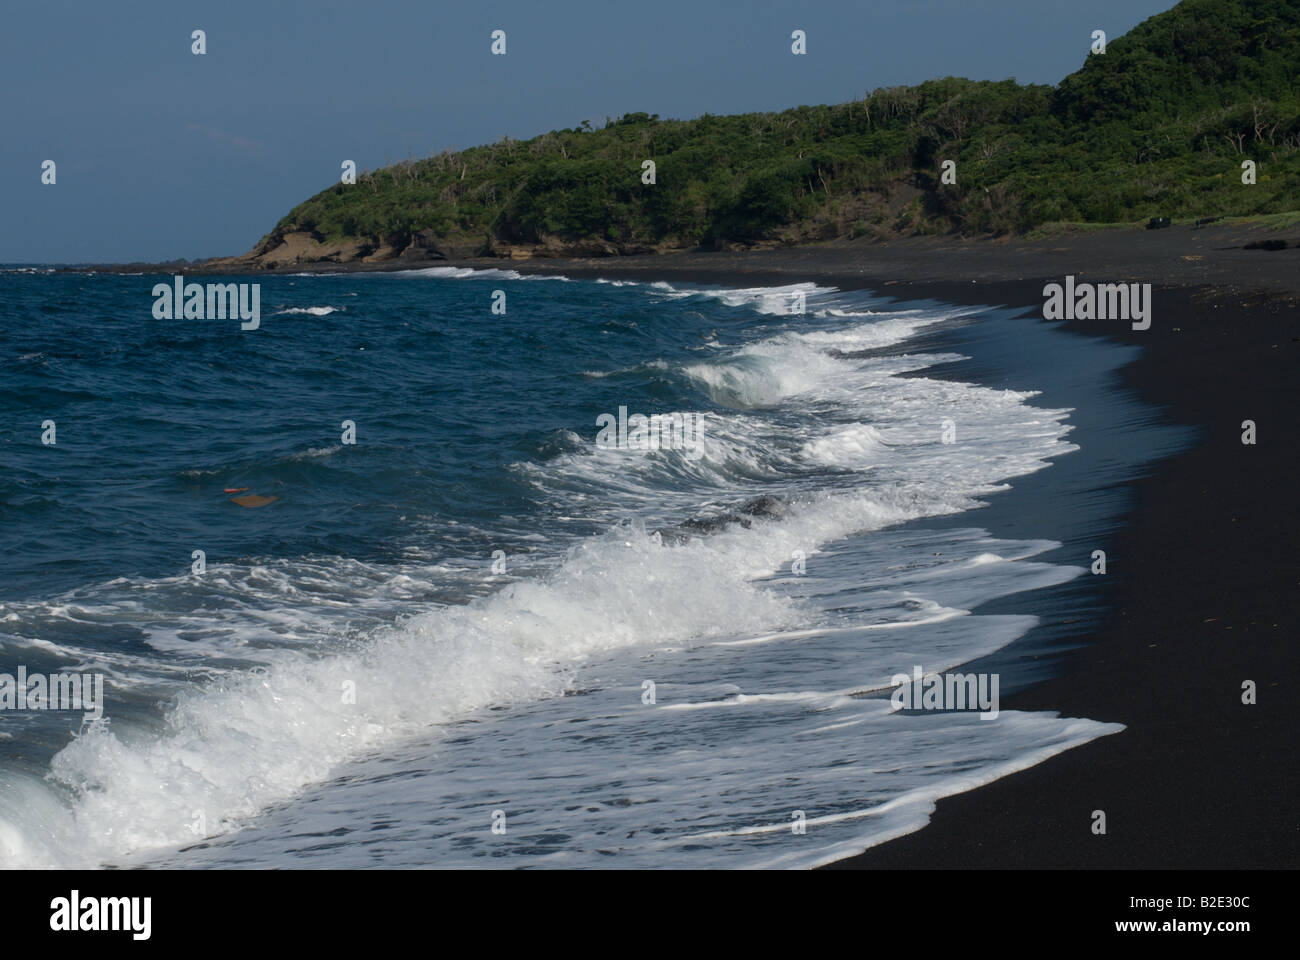 Sanohama beach with waves breaking on the black volcanic sand, Izu Oshima, Izu Islands, Japan. Stock Photo